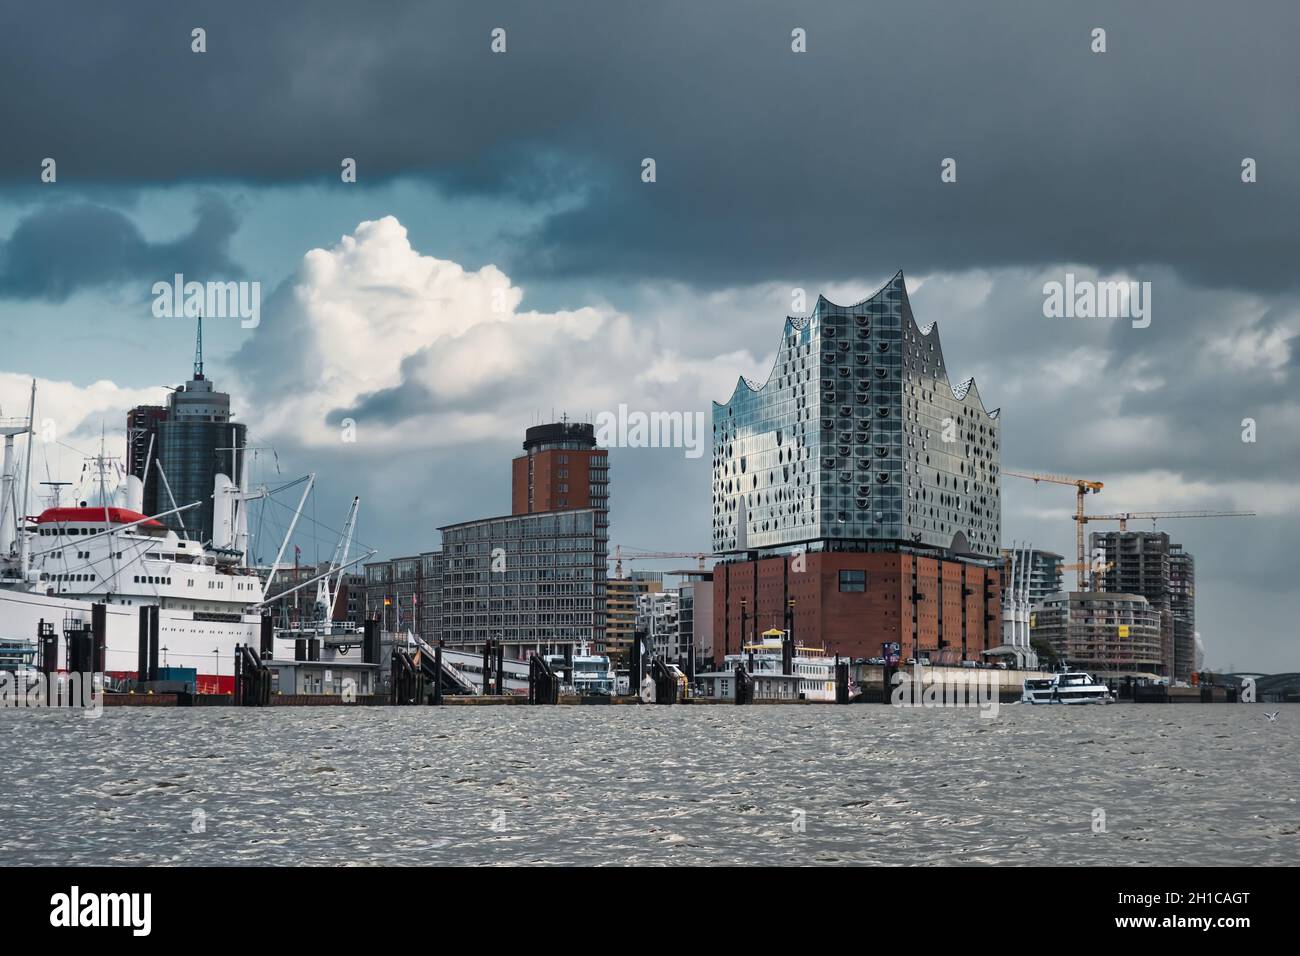 Elbphilharmonie modern concert hall in Hamburg harbor, Germany Stock ...